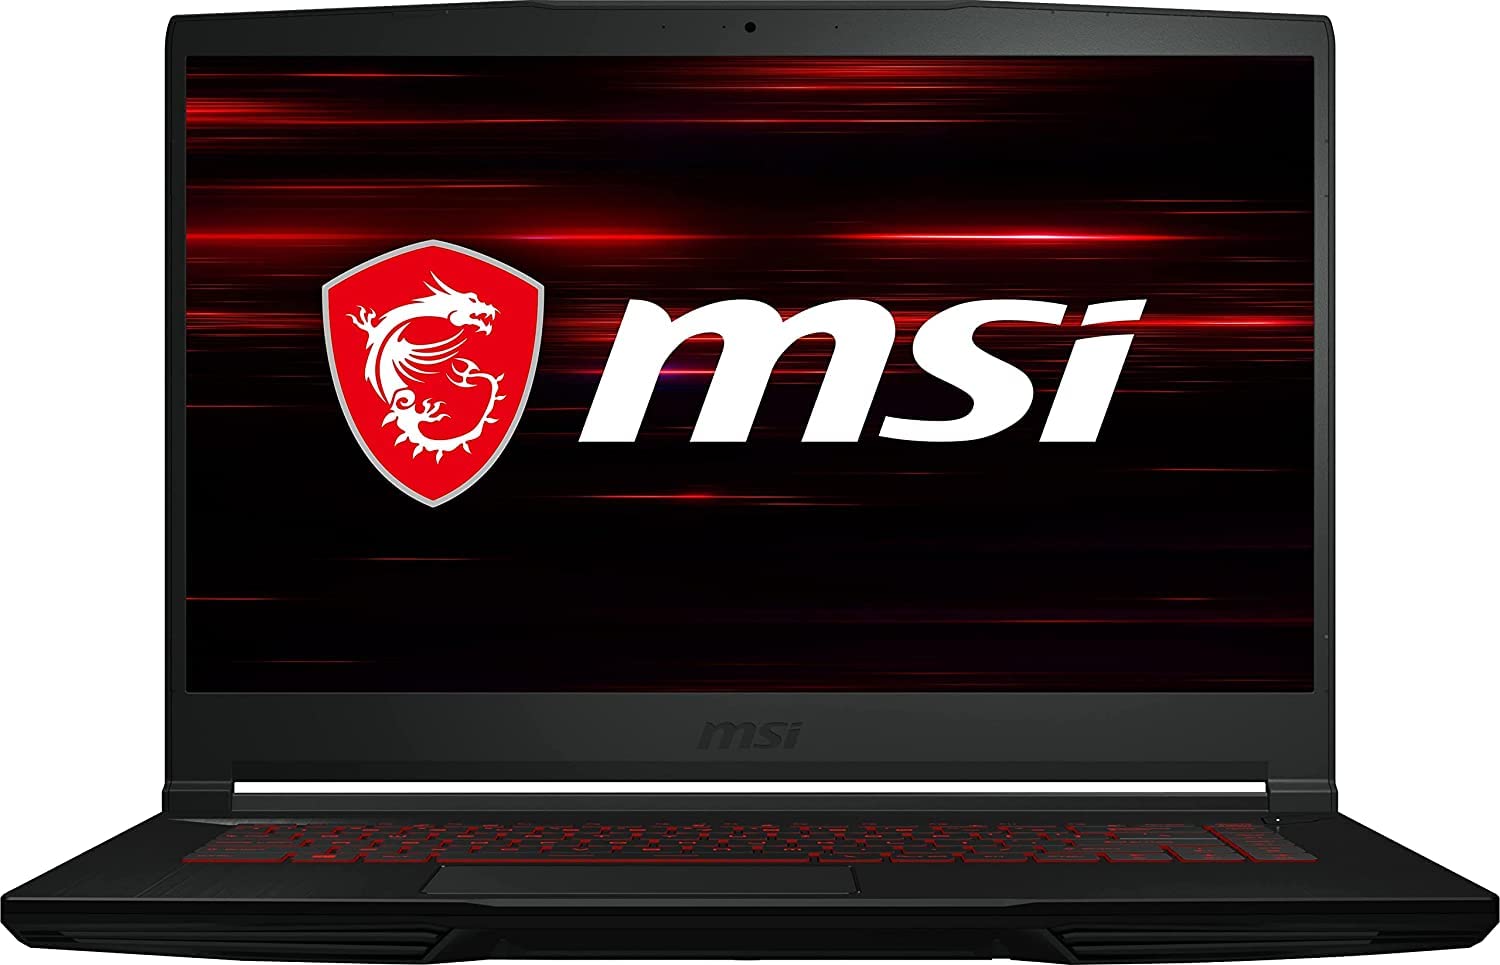 MSI GF63 Gaming Laptop 15.6 Full HD Display Intel Core i5-10500H Processor 16GB RAM 1TB SSD NVIDIA GeForce GTX 1650 Gra